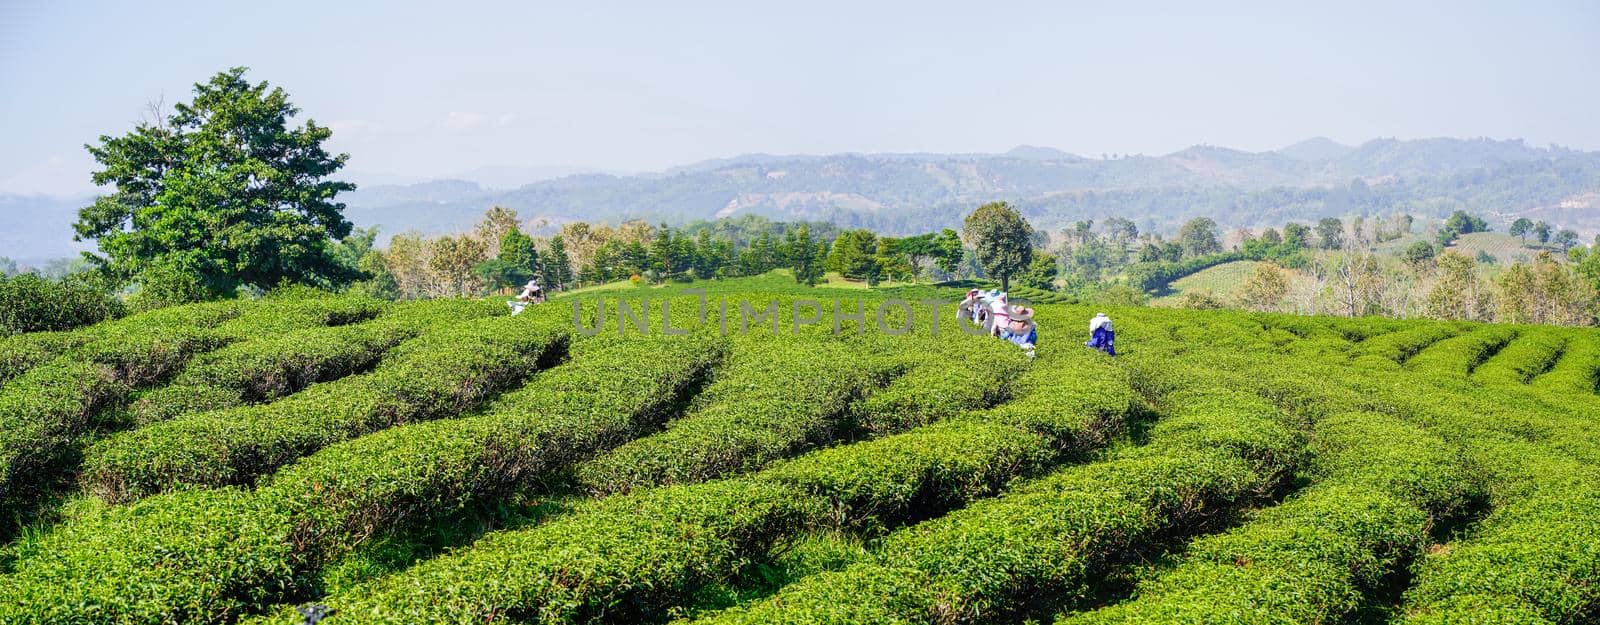 Worker picking tea leaves in tea plantation by stoonn